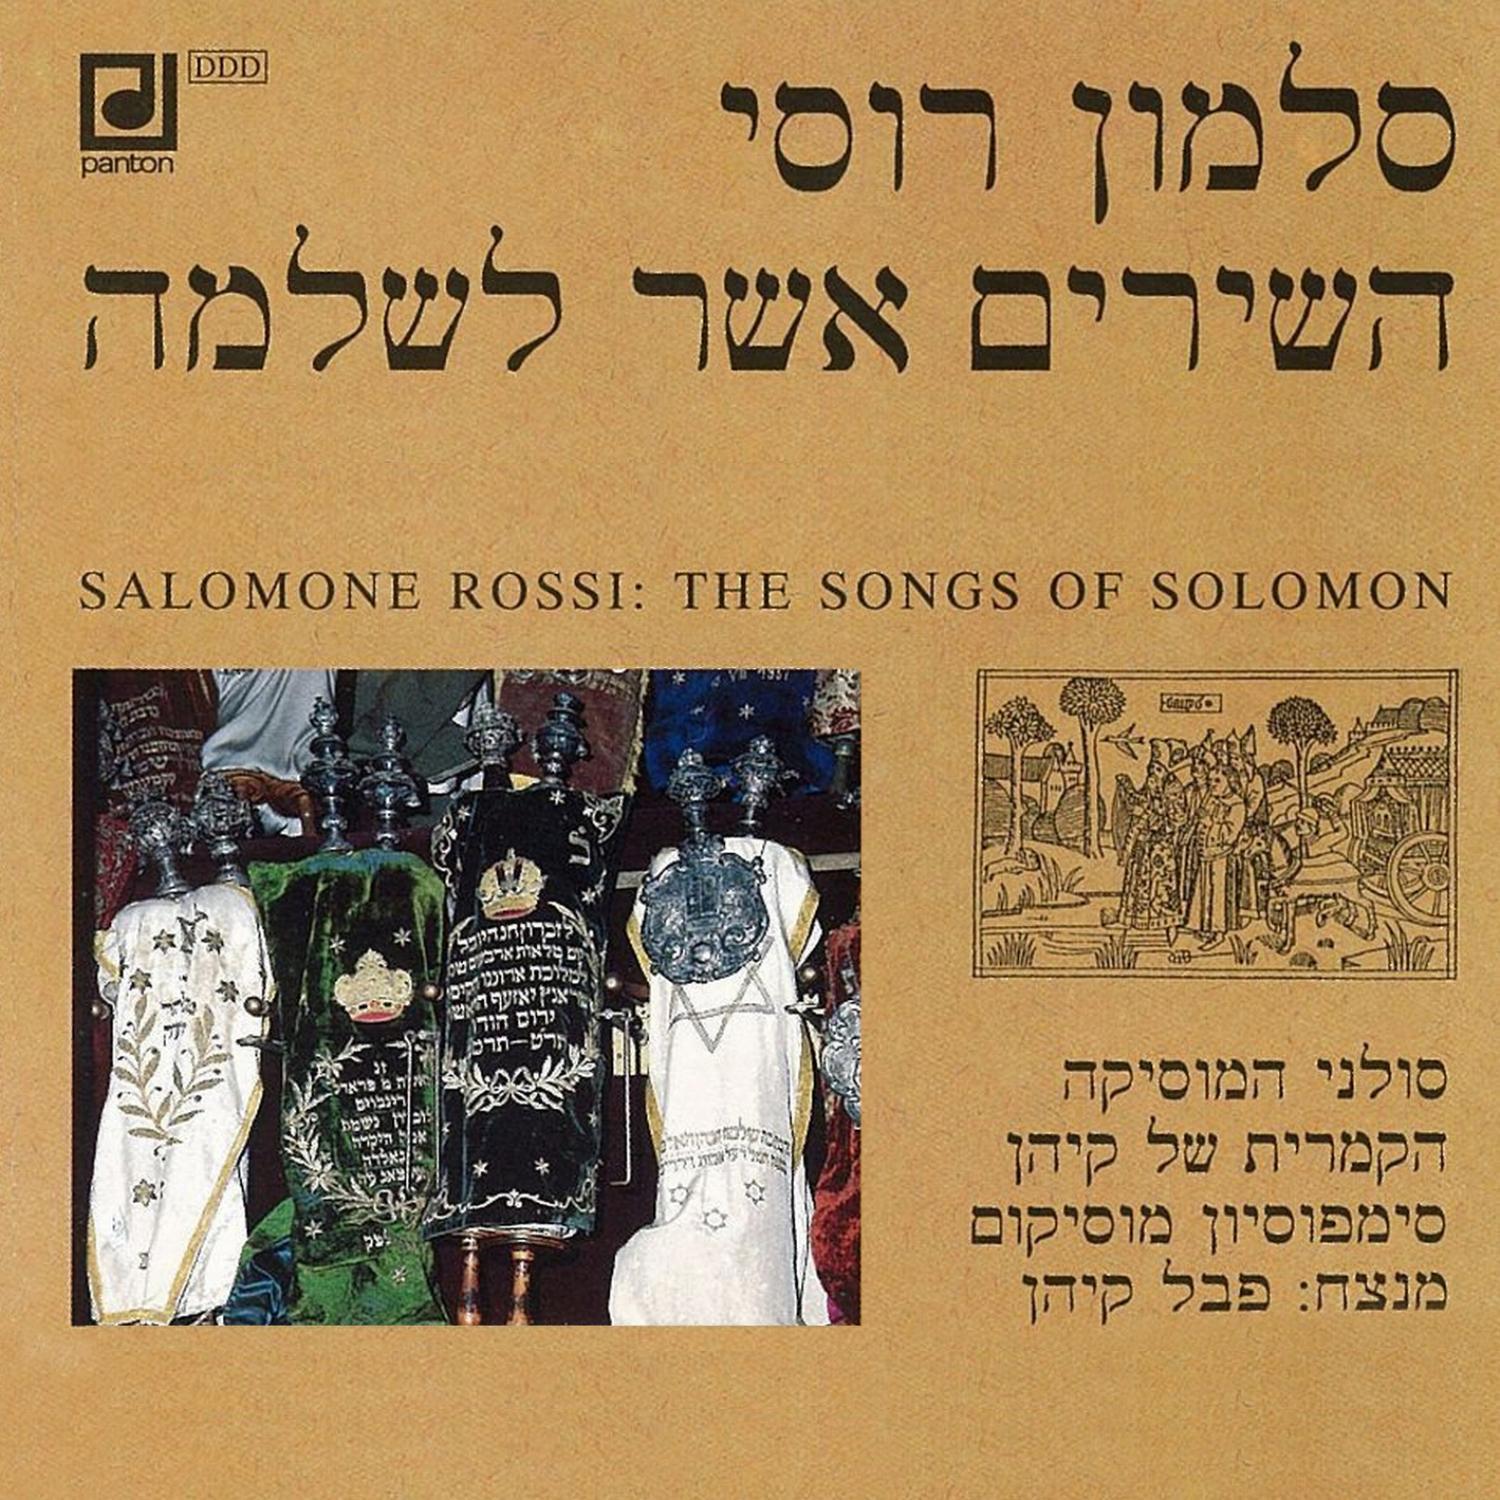 Salomone Rossi - The Songs of Solomon - Cycle of 33 Spiritual Songs: Barukh haba b??shem adonai